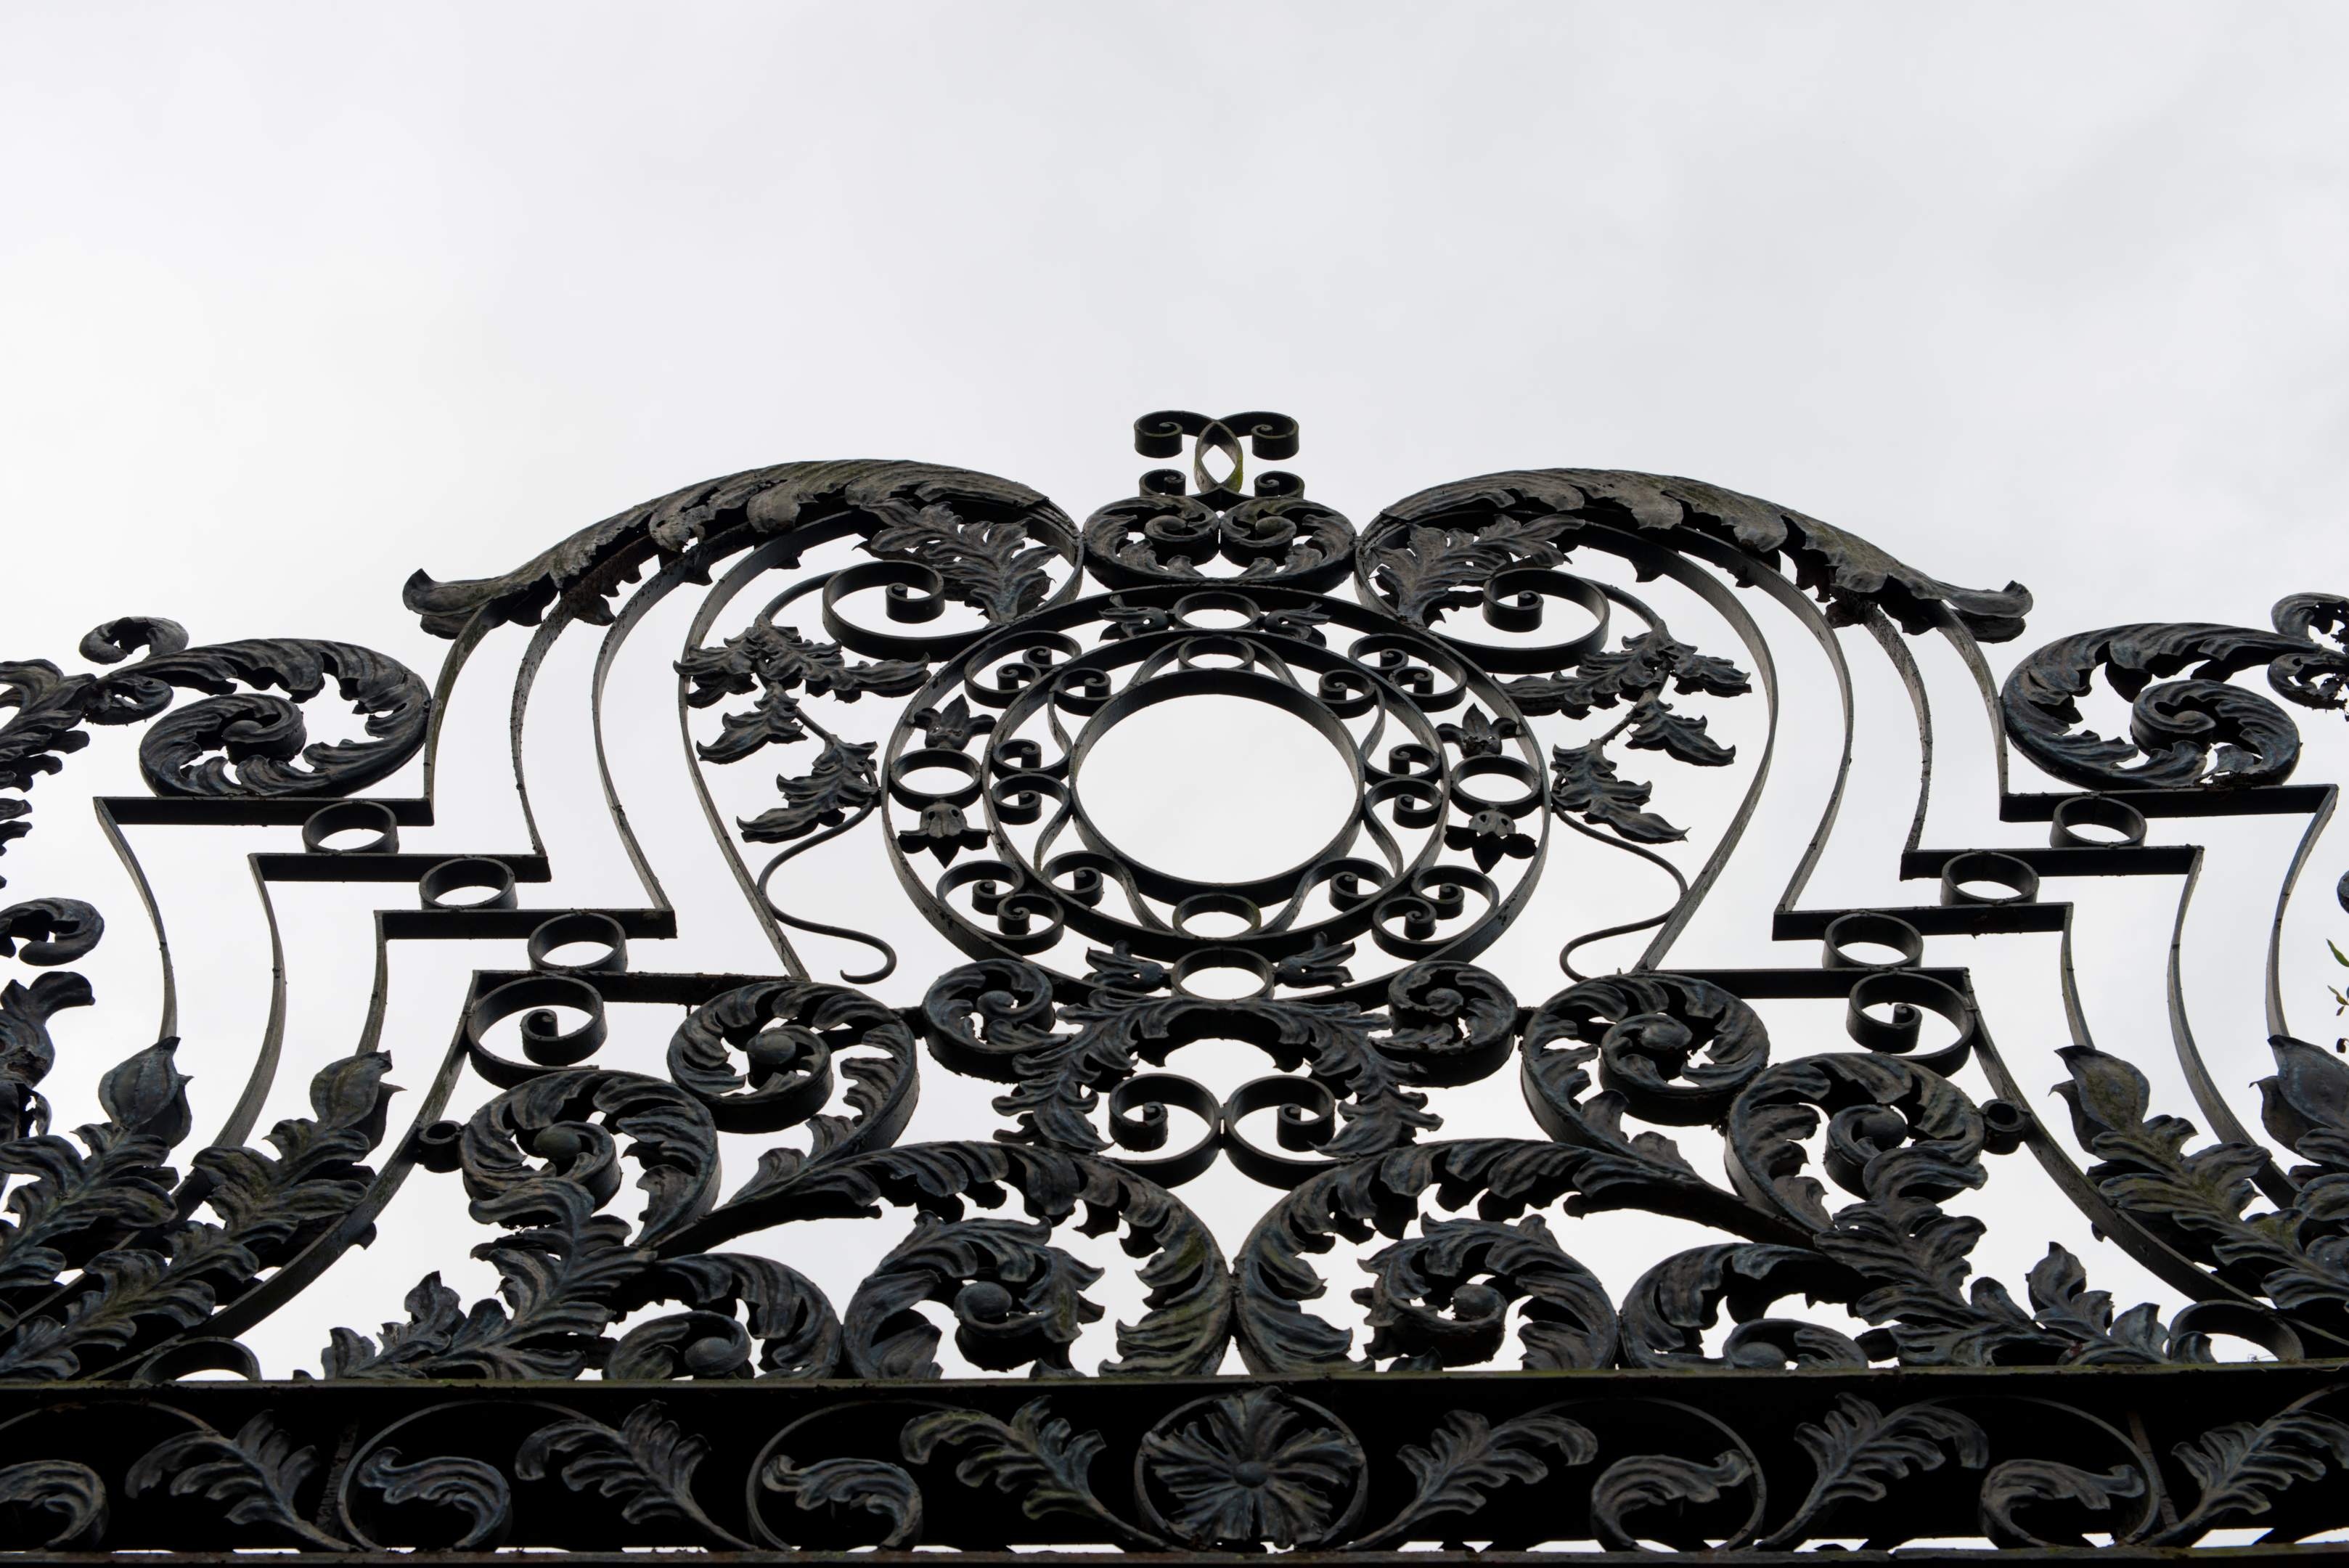 Image of the artistic Promenade gate made by Almario